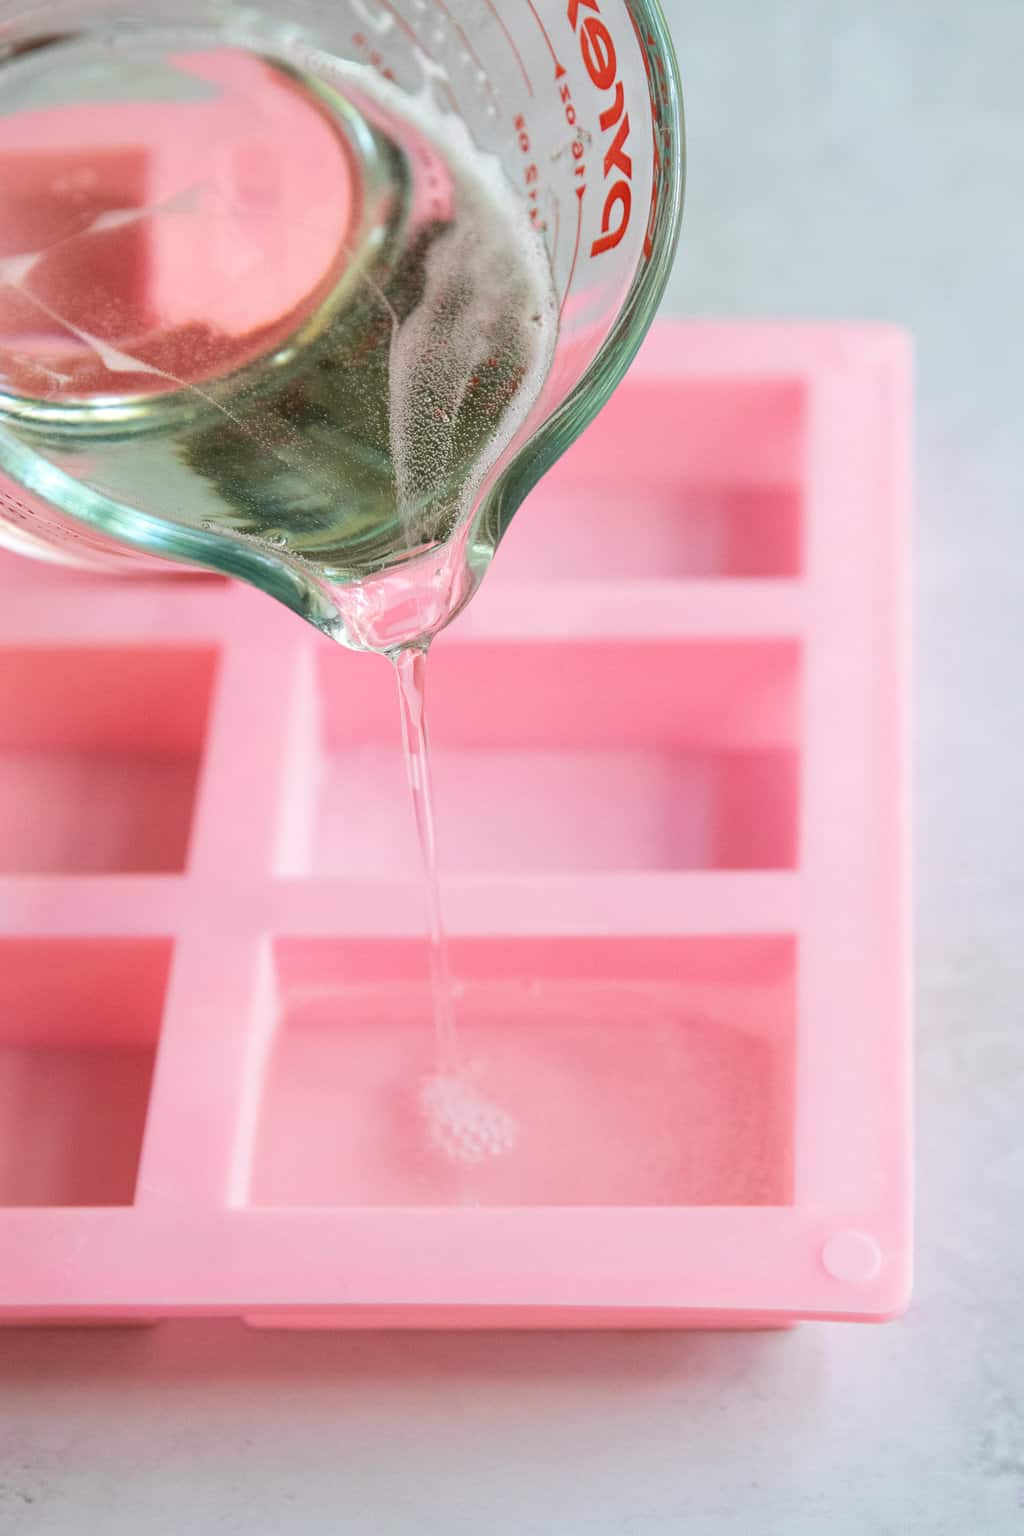 Pour glycerin soap into soap molds